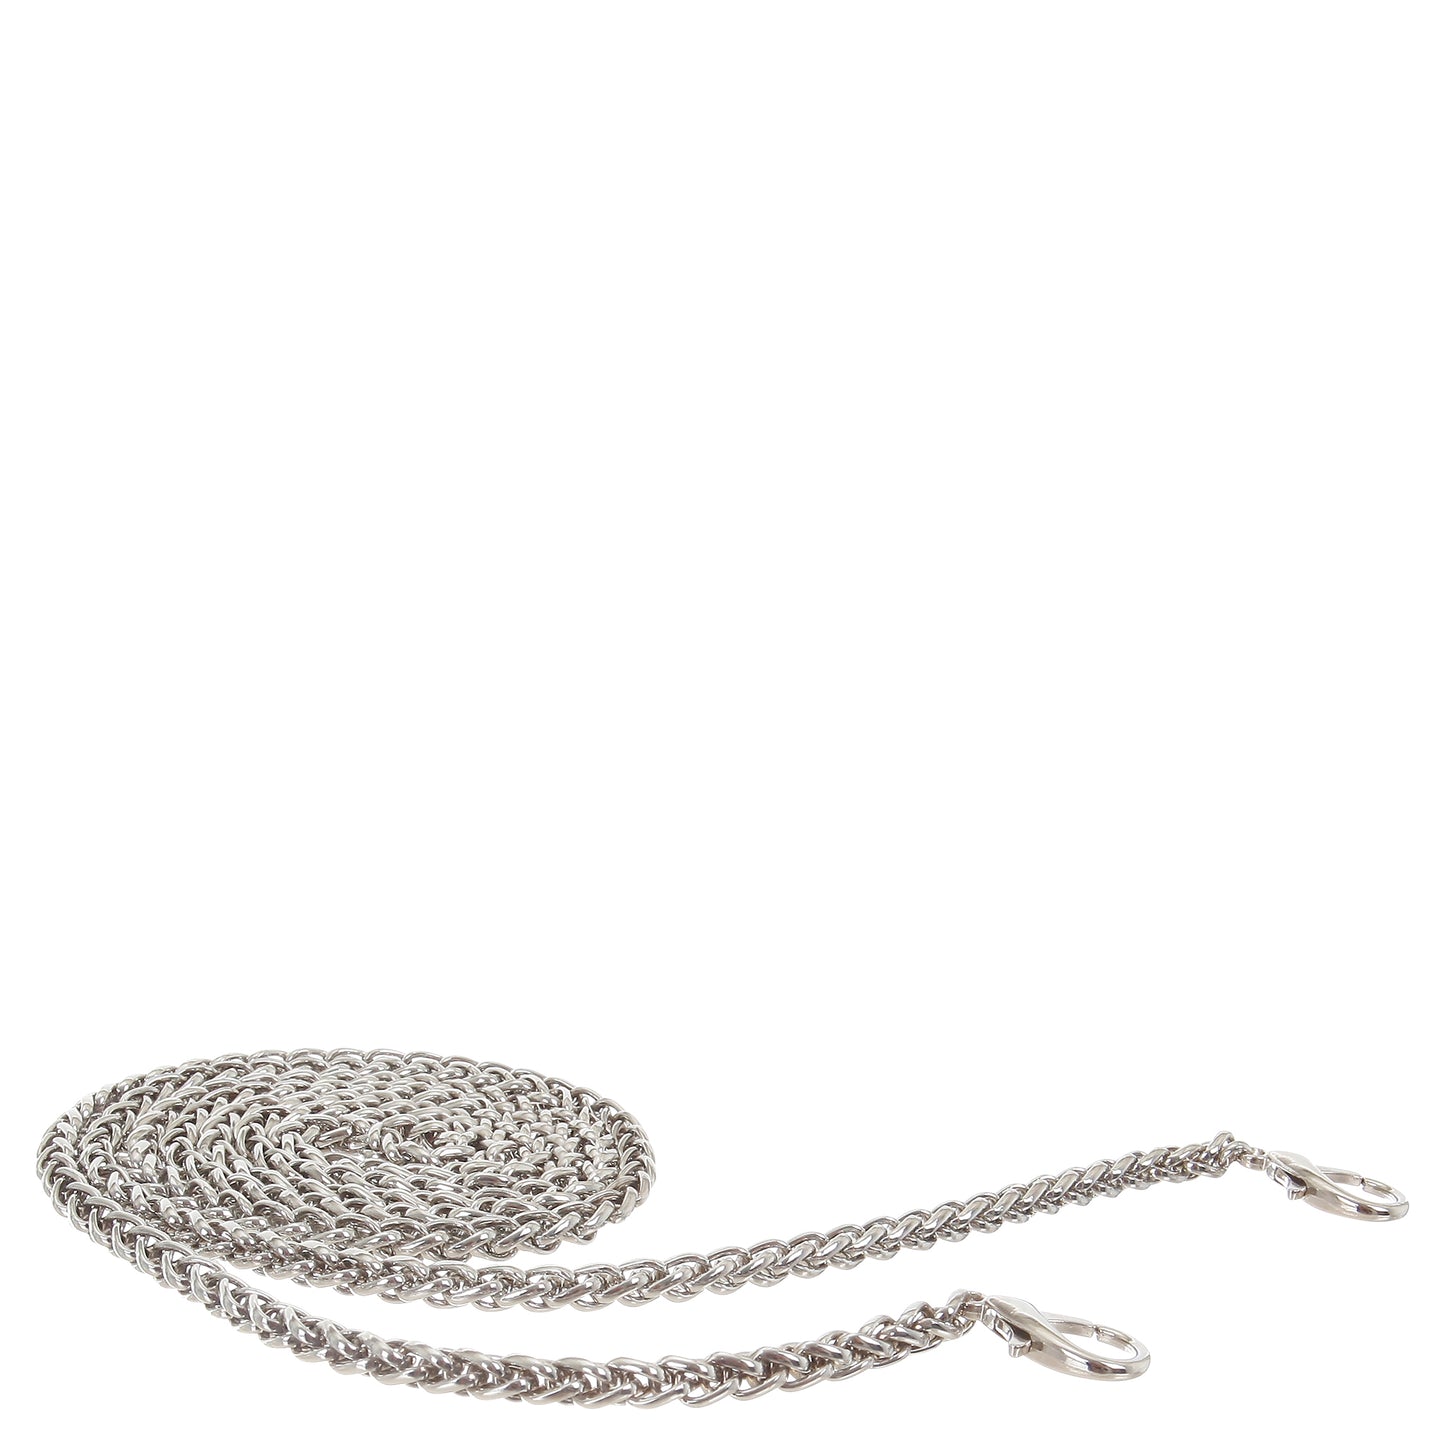 Svala silver purse chain